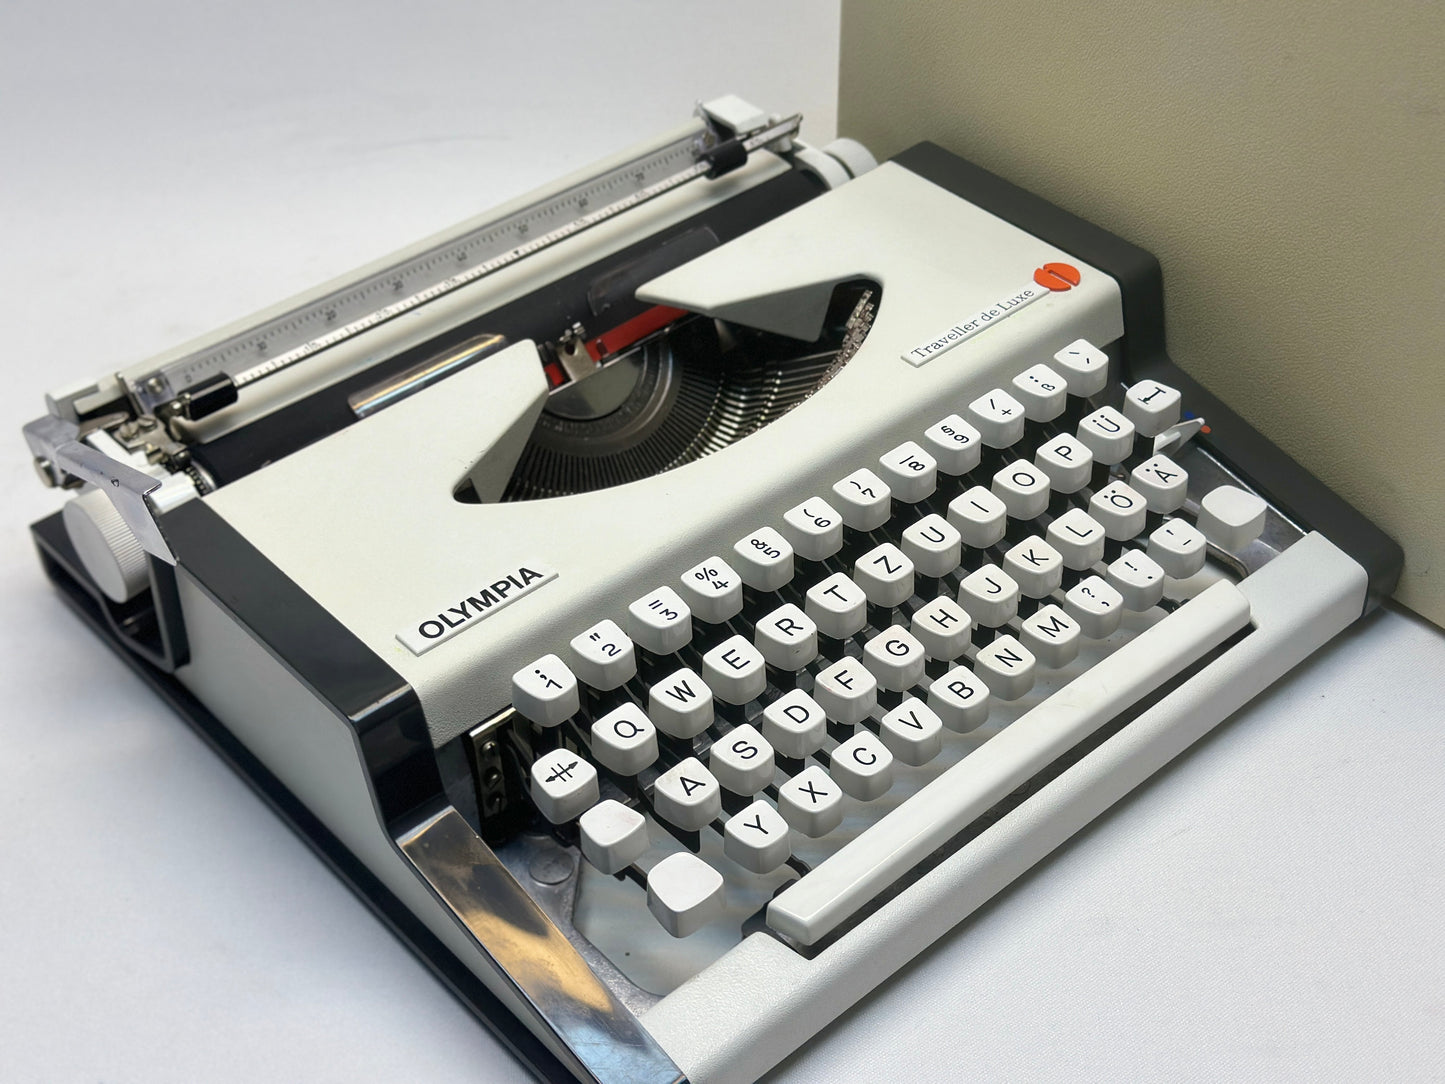 Capture Vintage Elegance with the Olympia Traveller Typewriter - German-Made, QWERTZ Keyboard